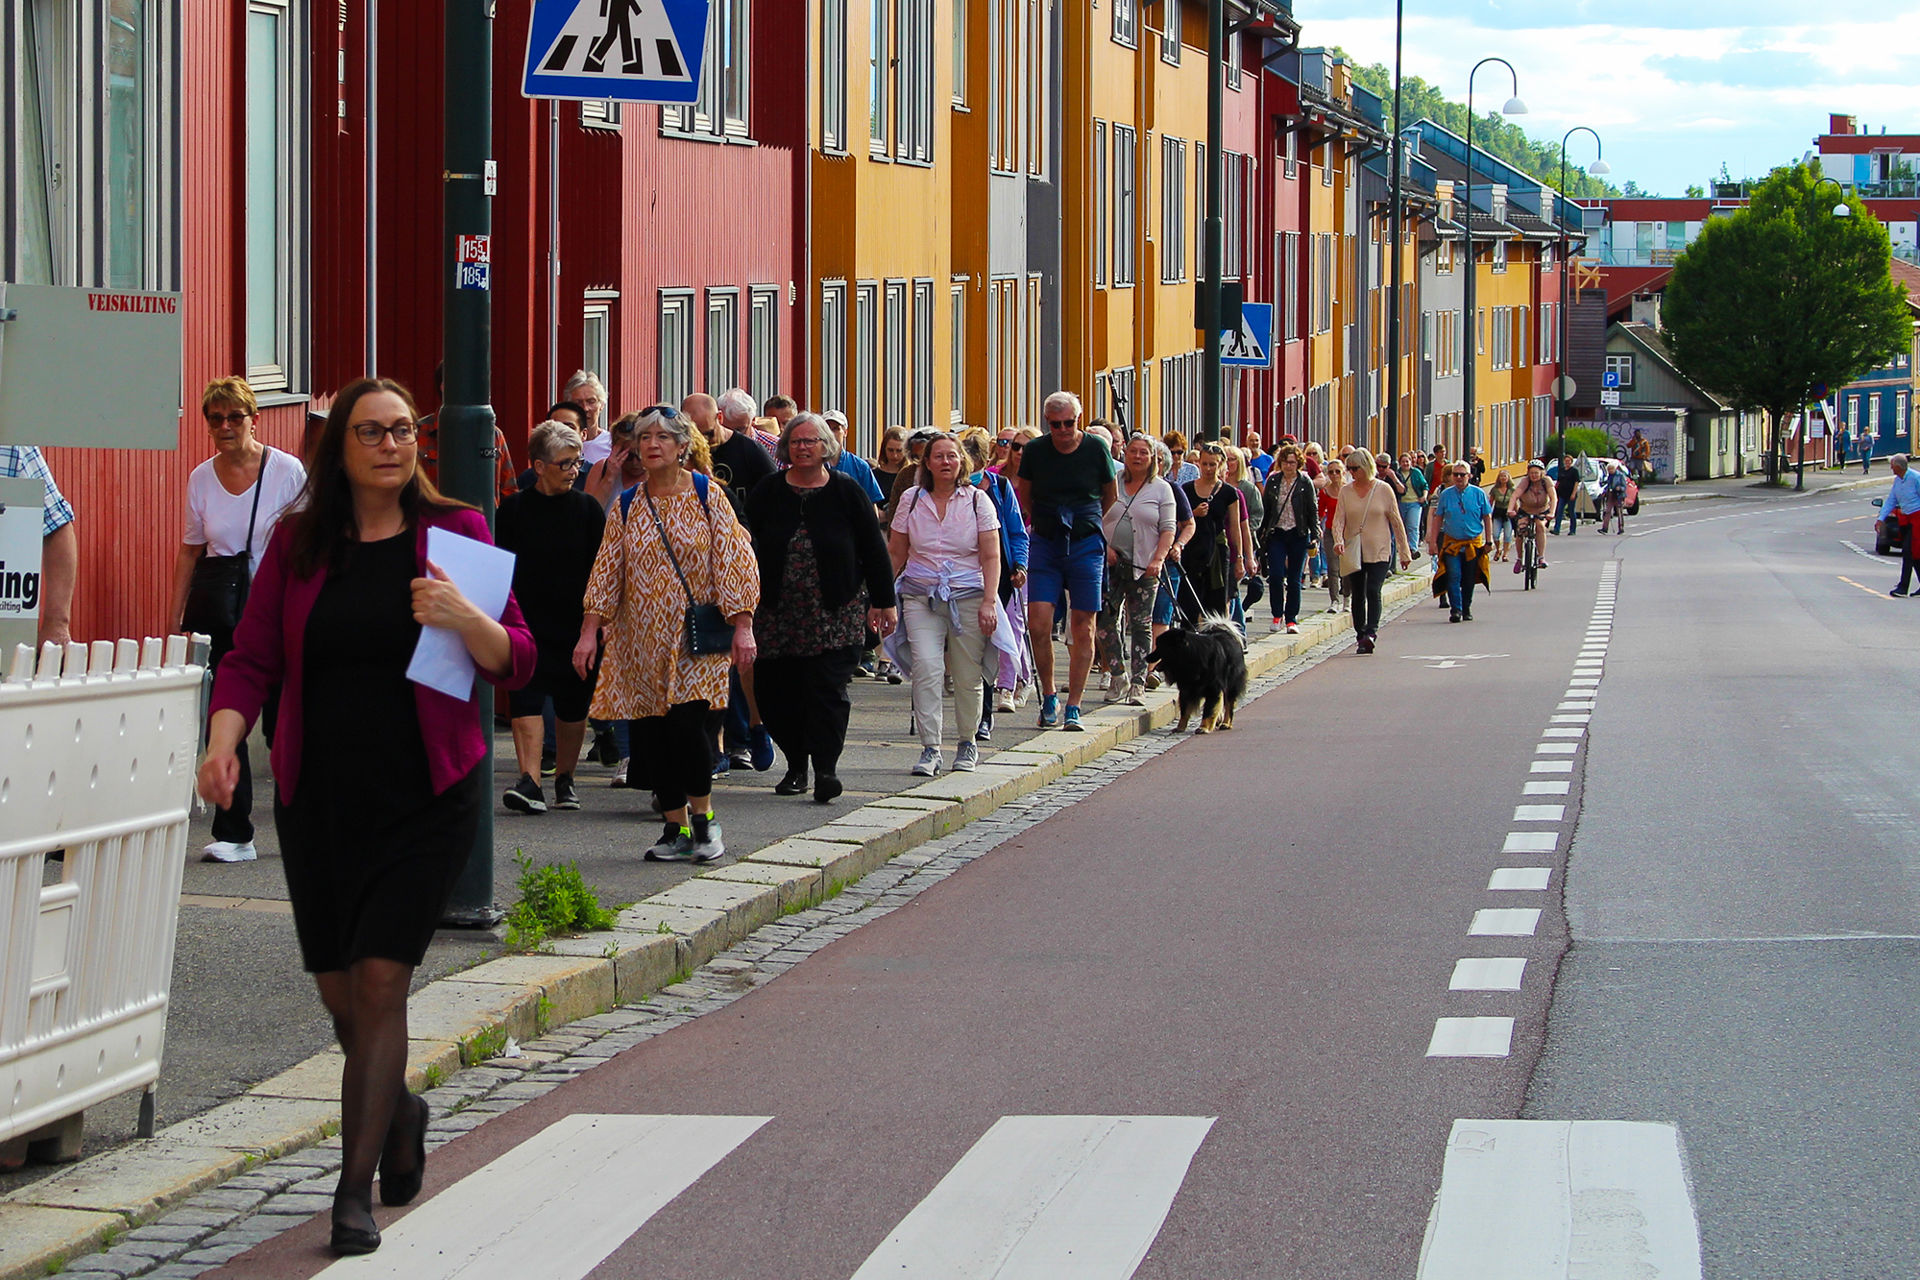 Mange mennesker på byvandring går på fortauet foran fargerike bygg.